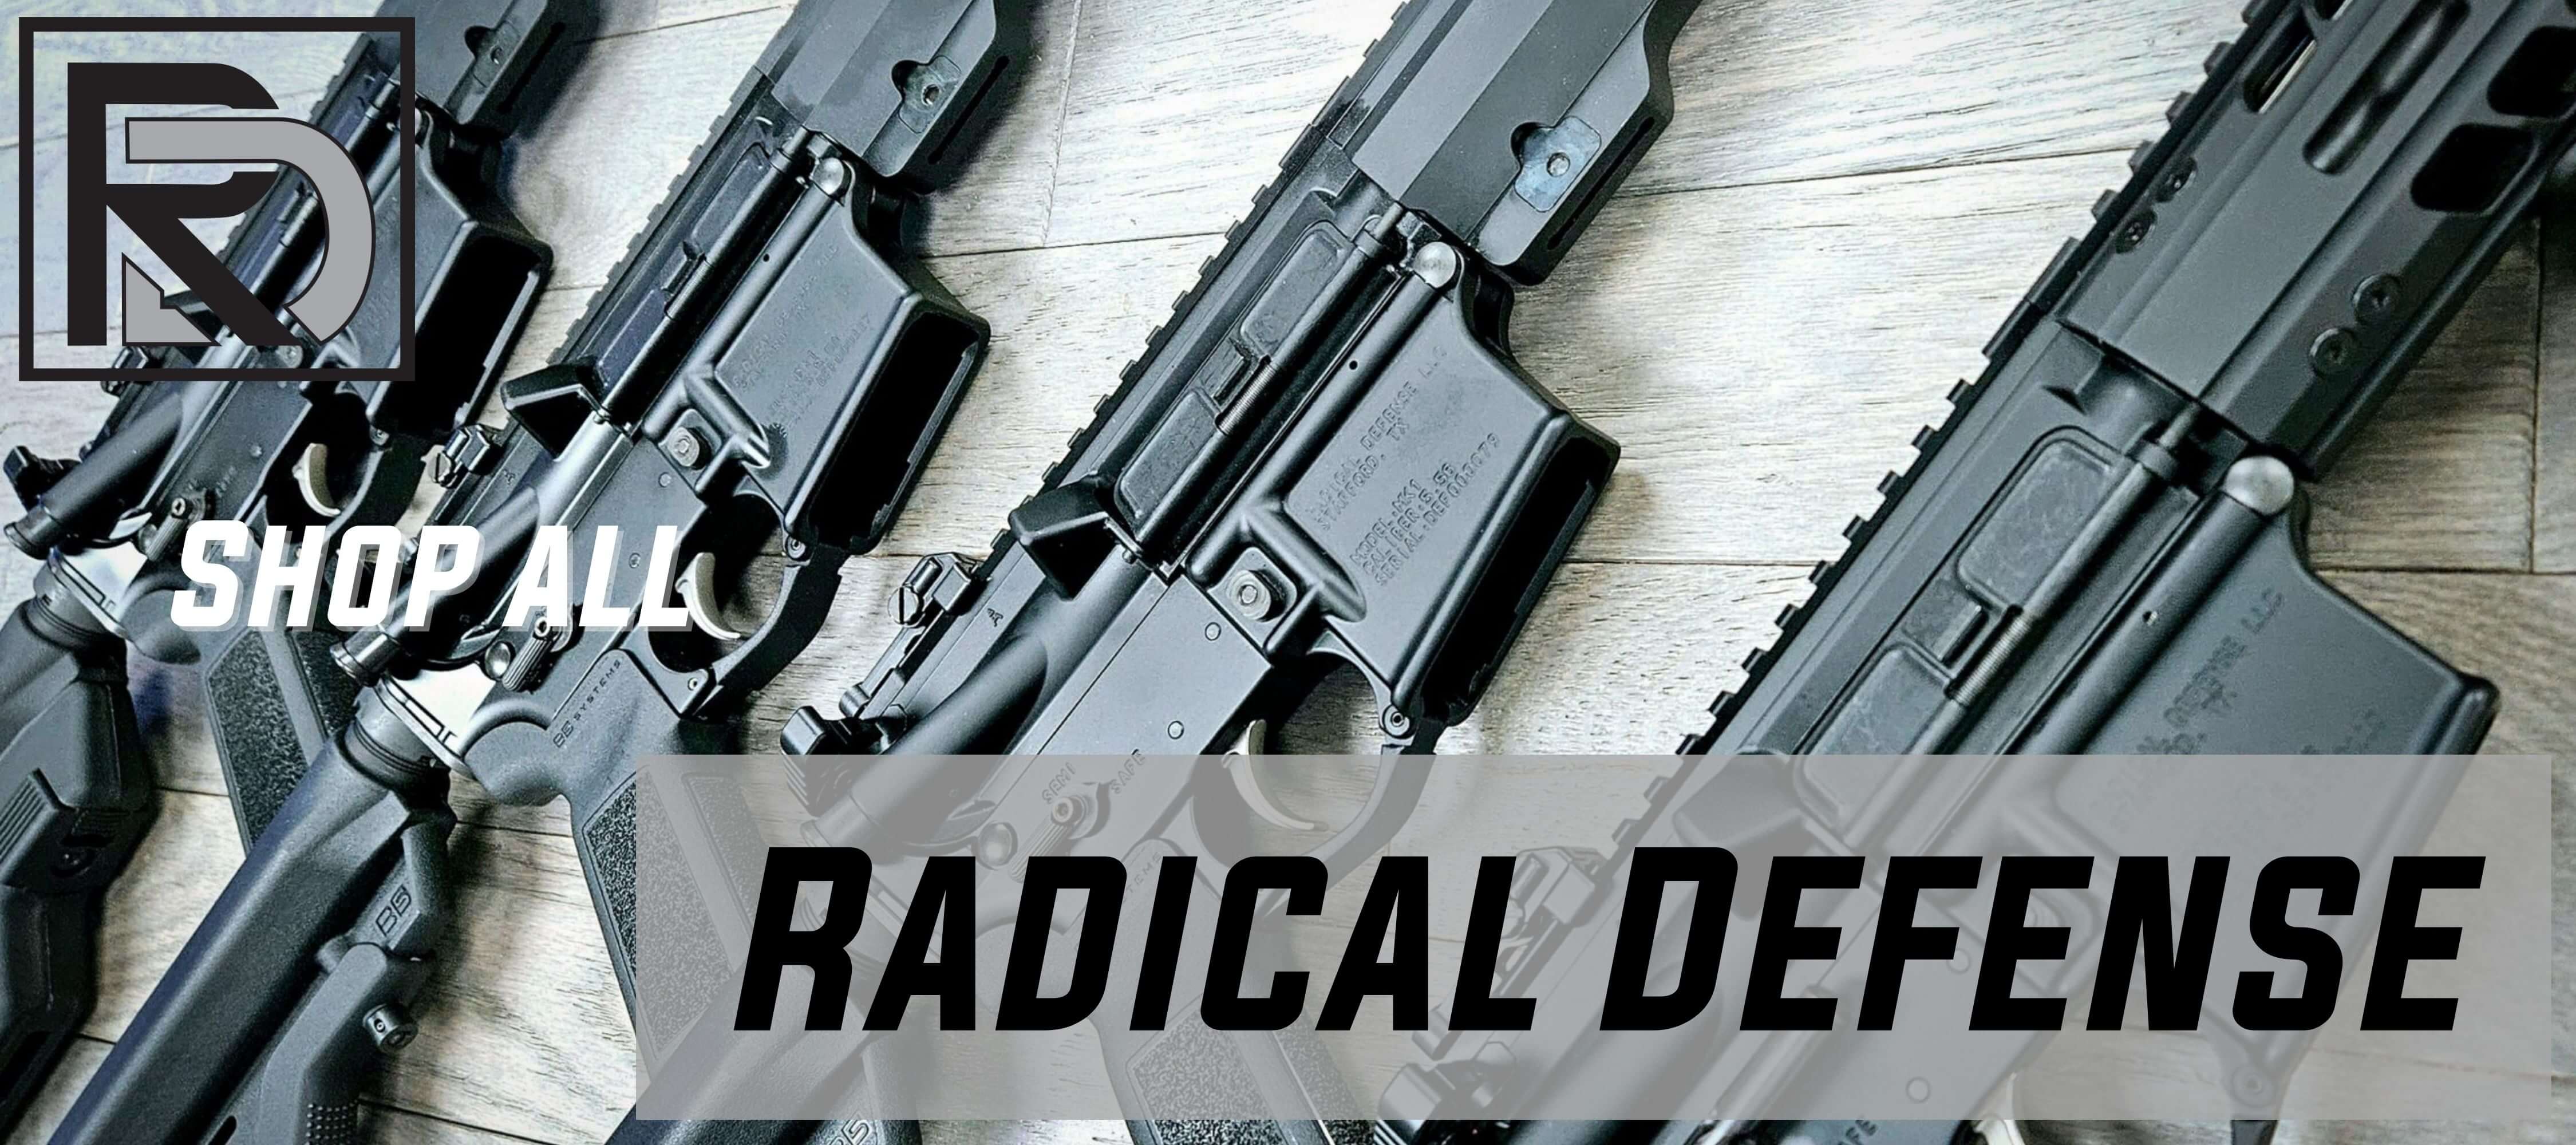 Radical Defense